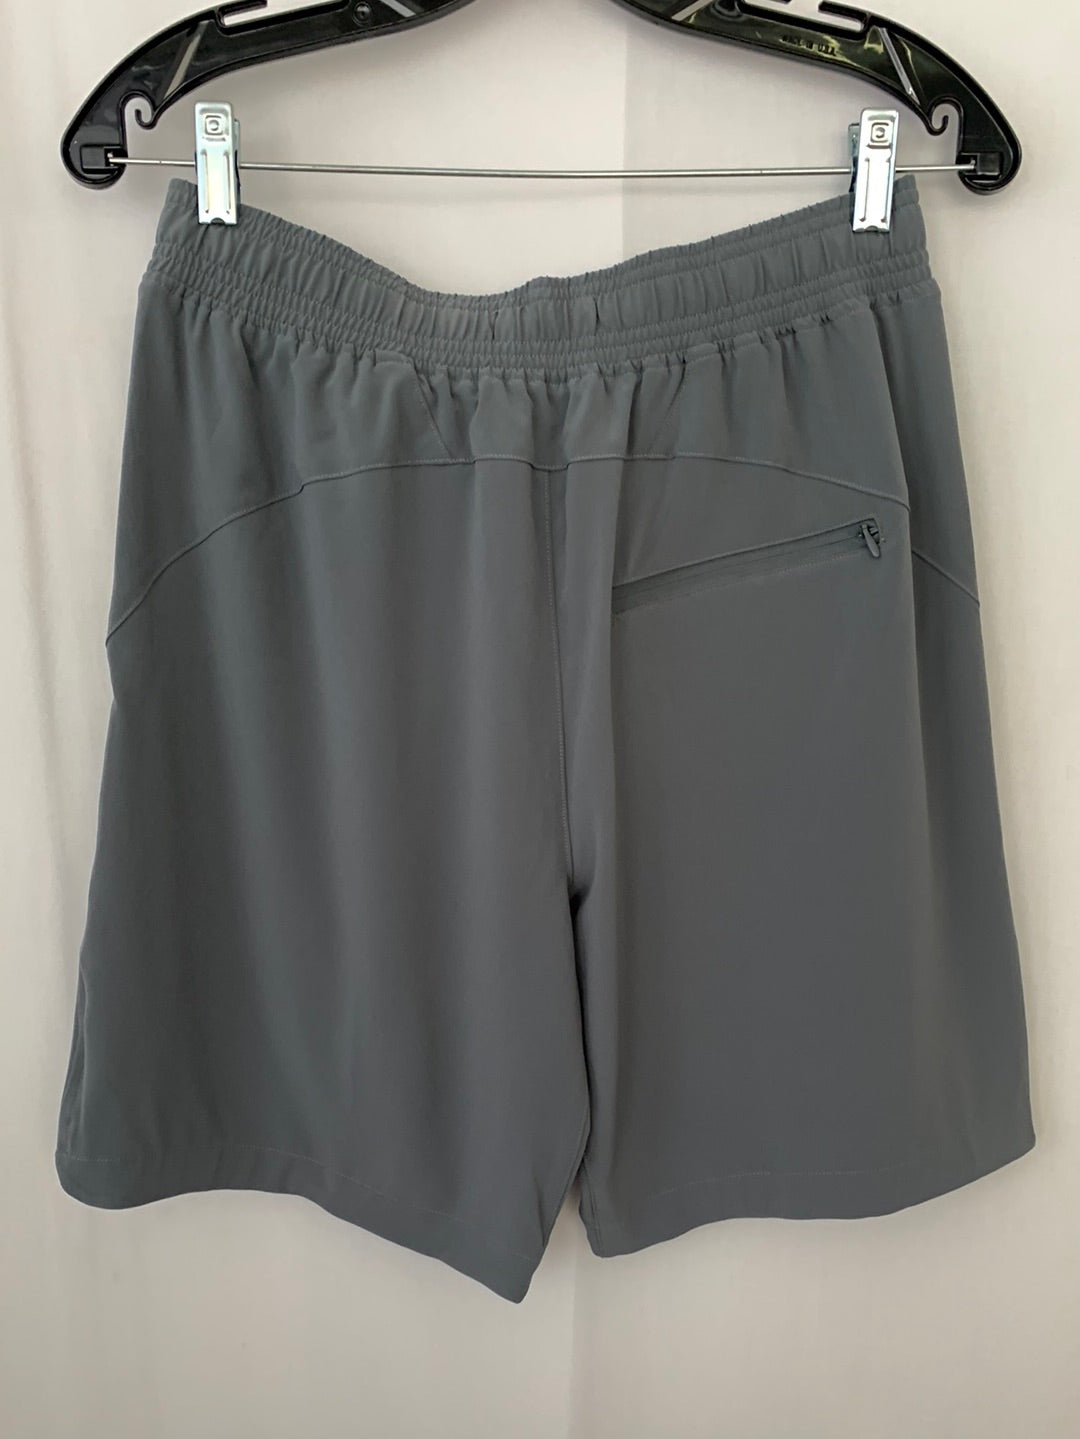 NWT - ITALIC gray 9" Athletic Unlined Stride Shorts - Men's Medium